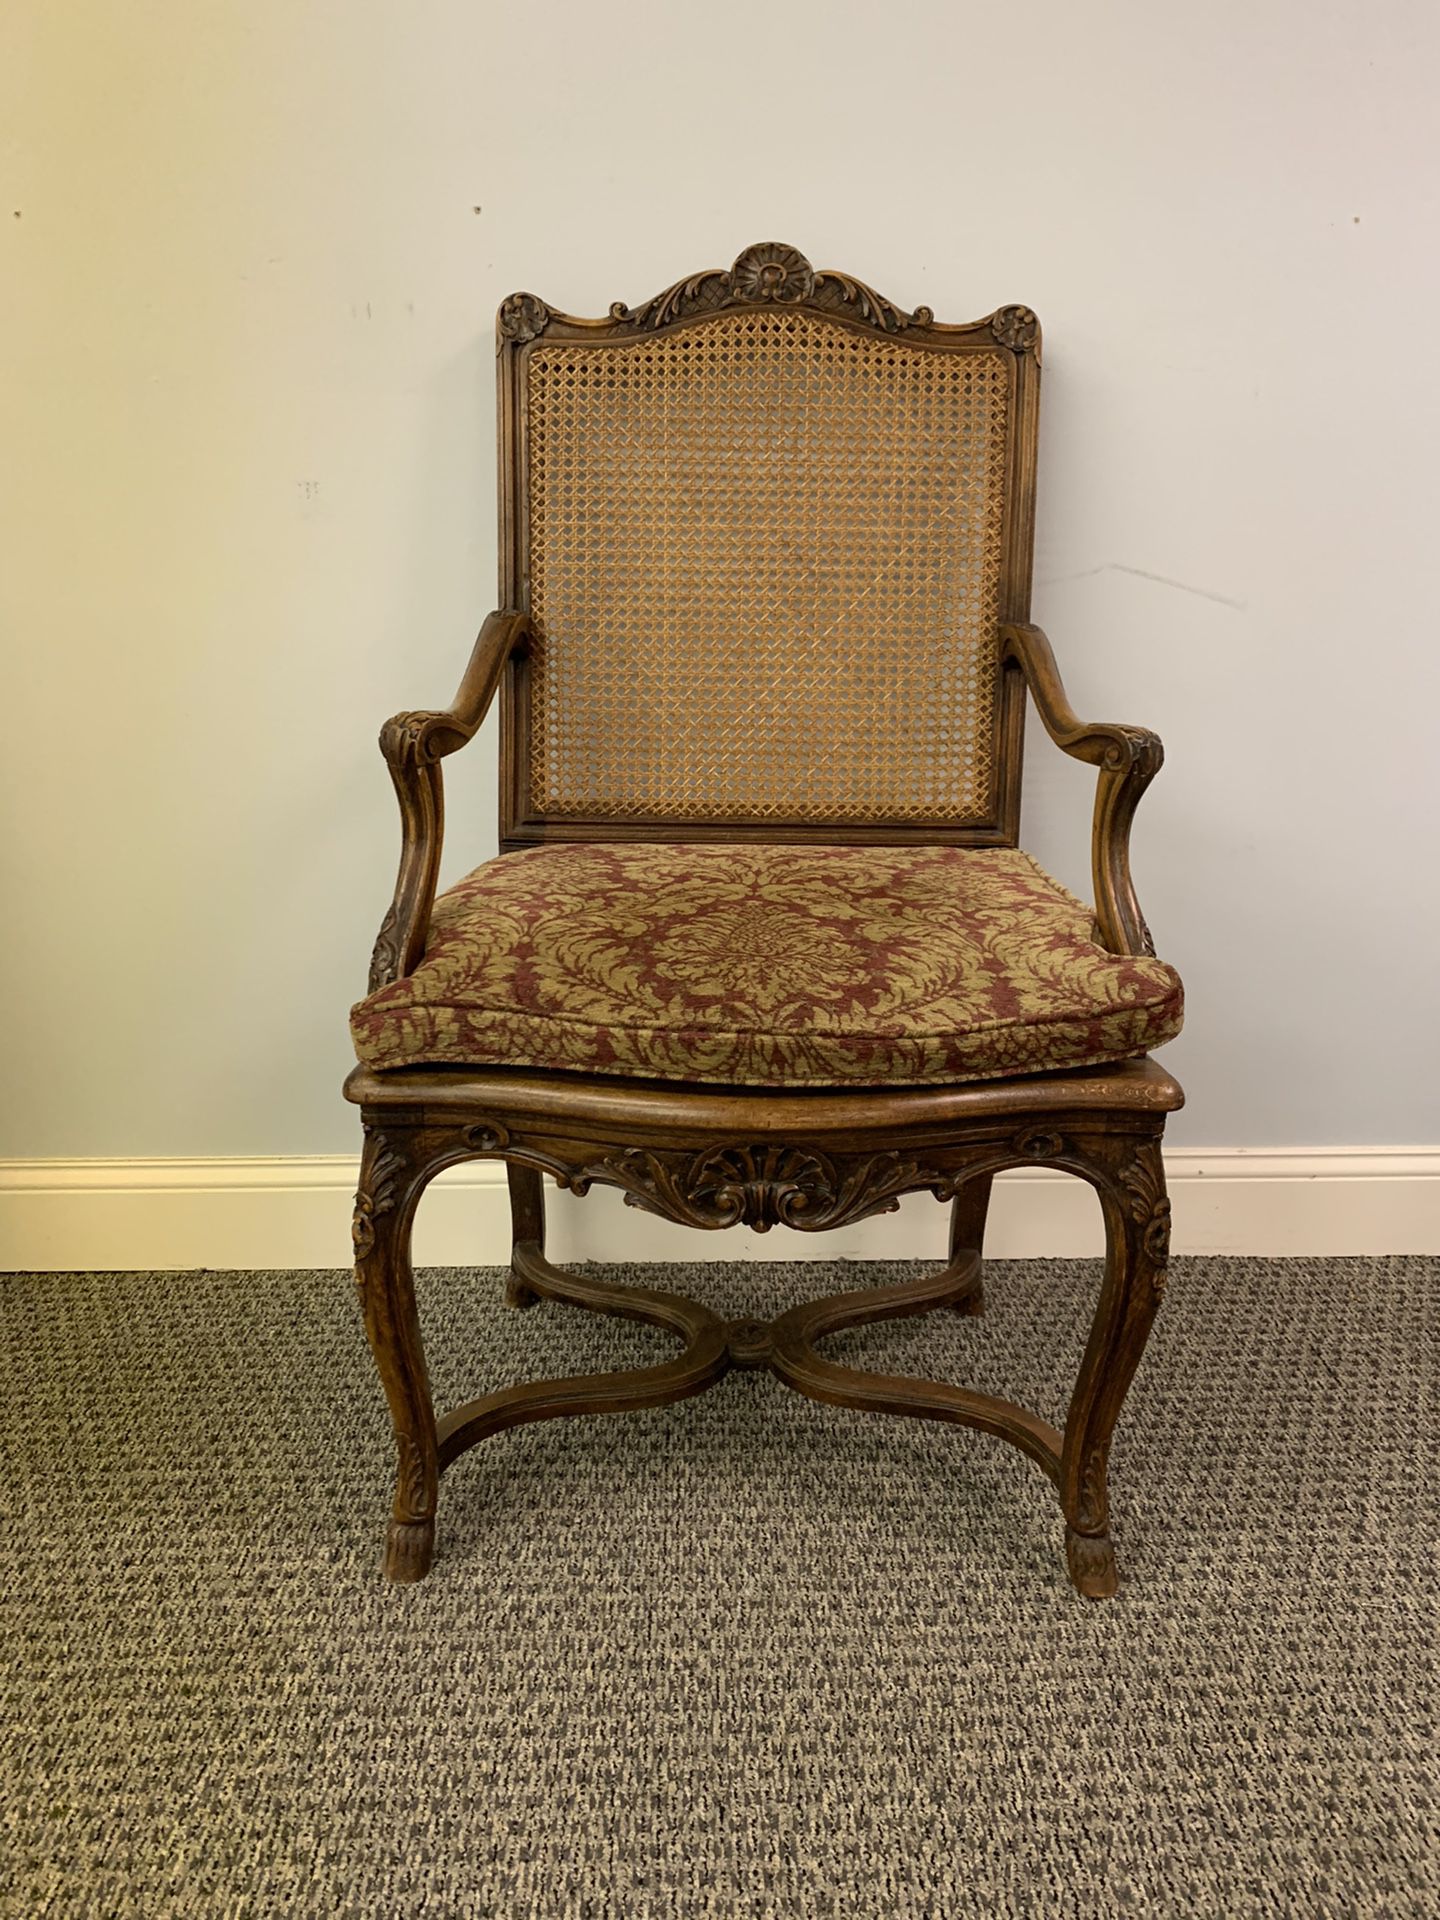 Antique wicker chair with custom cushion